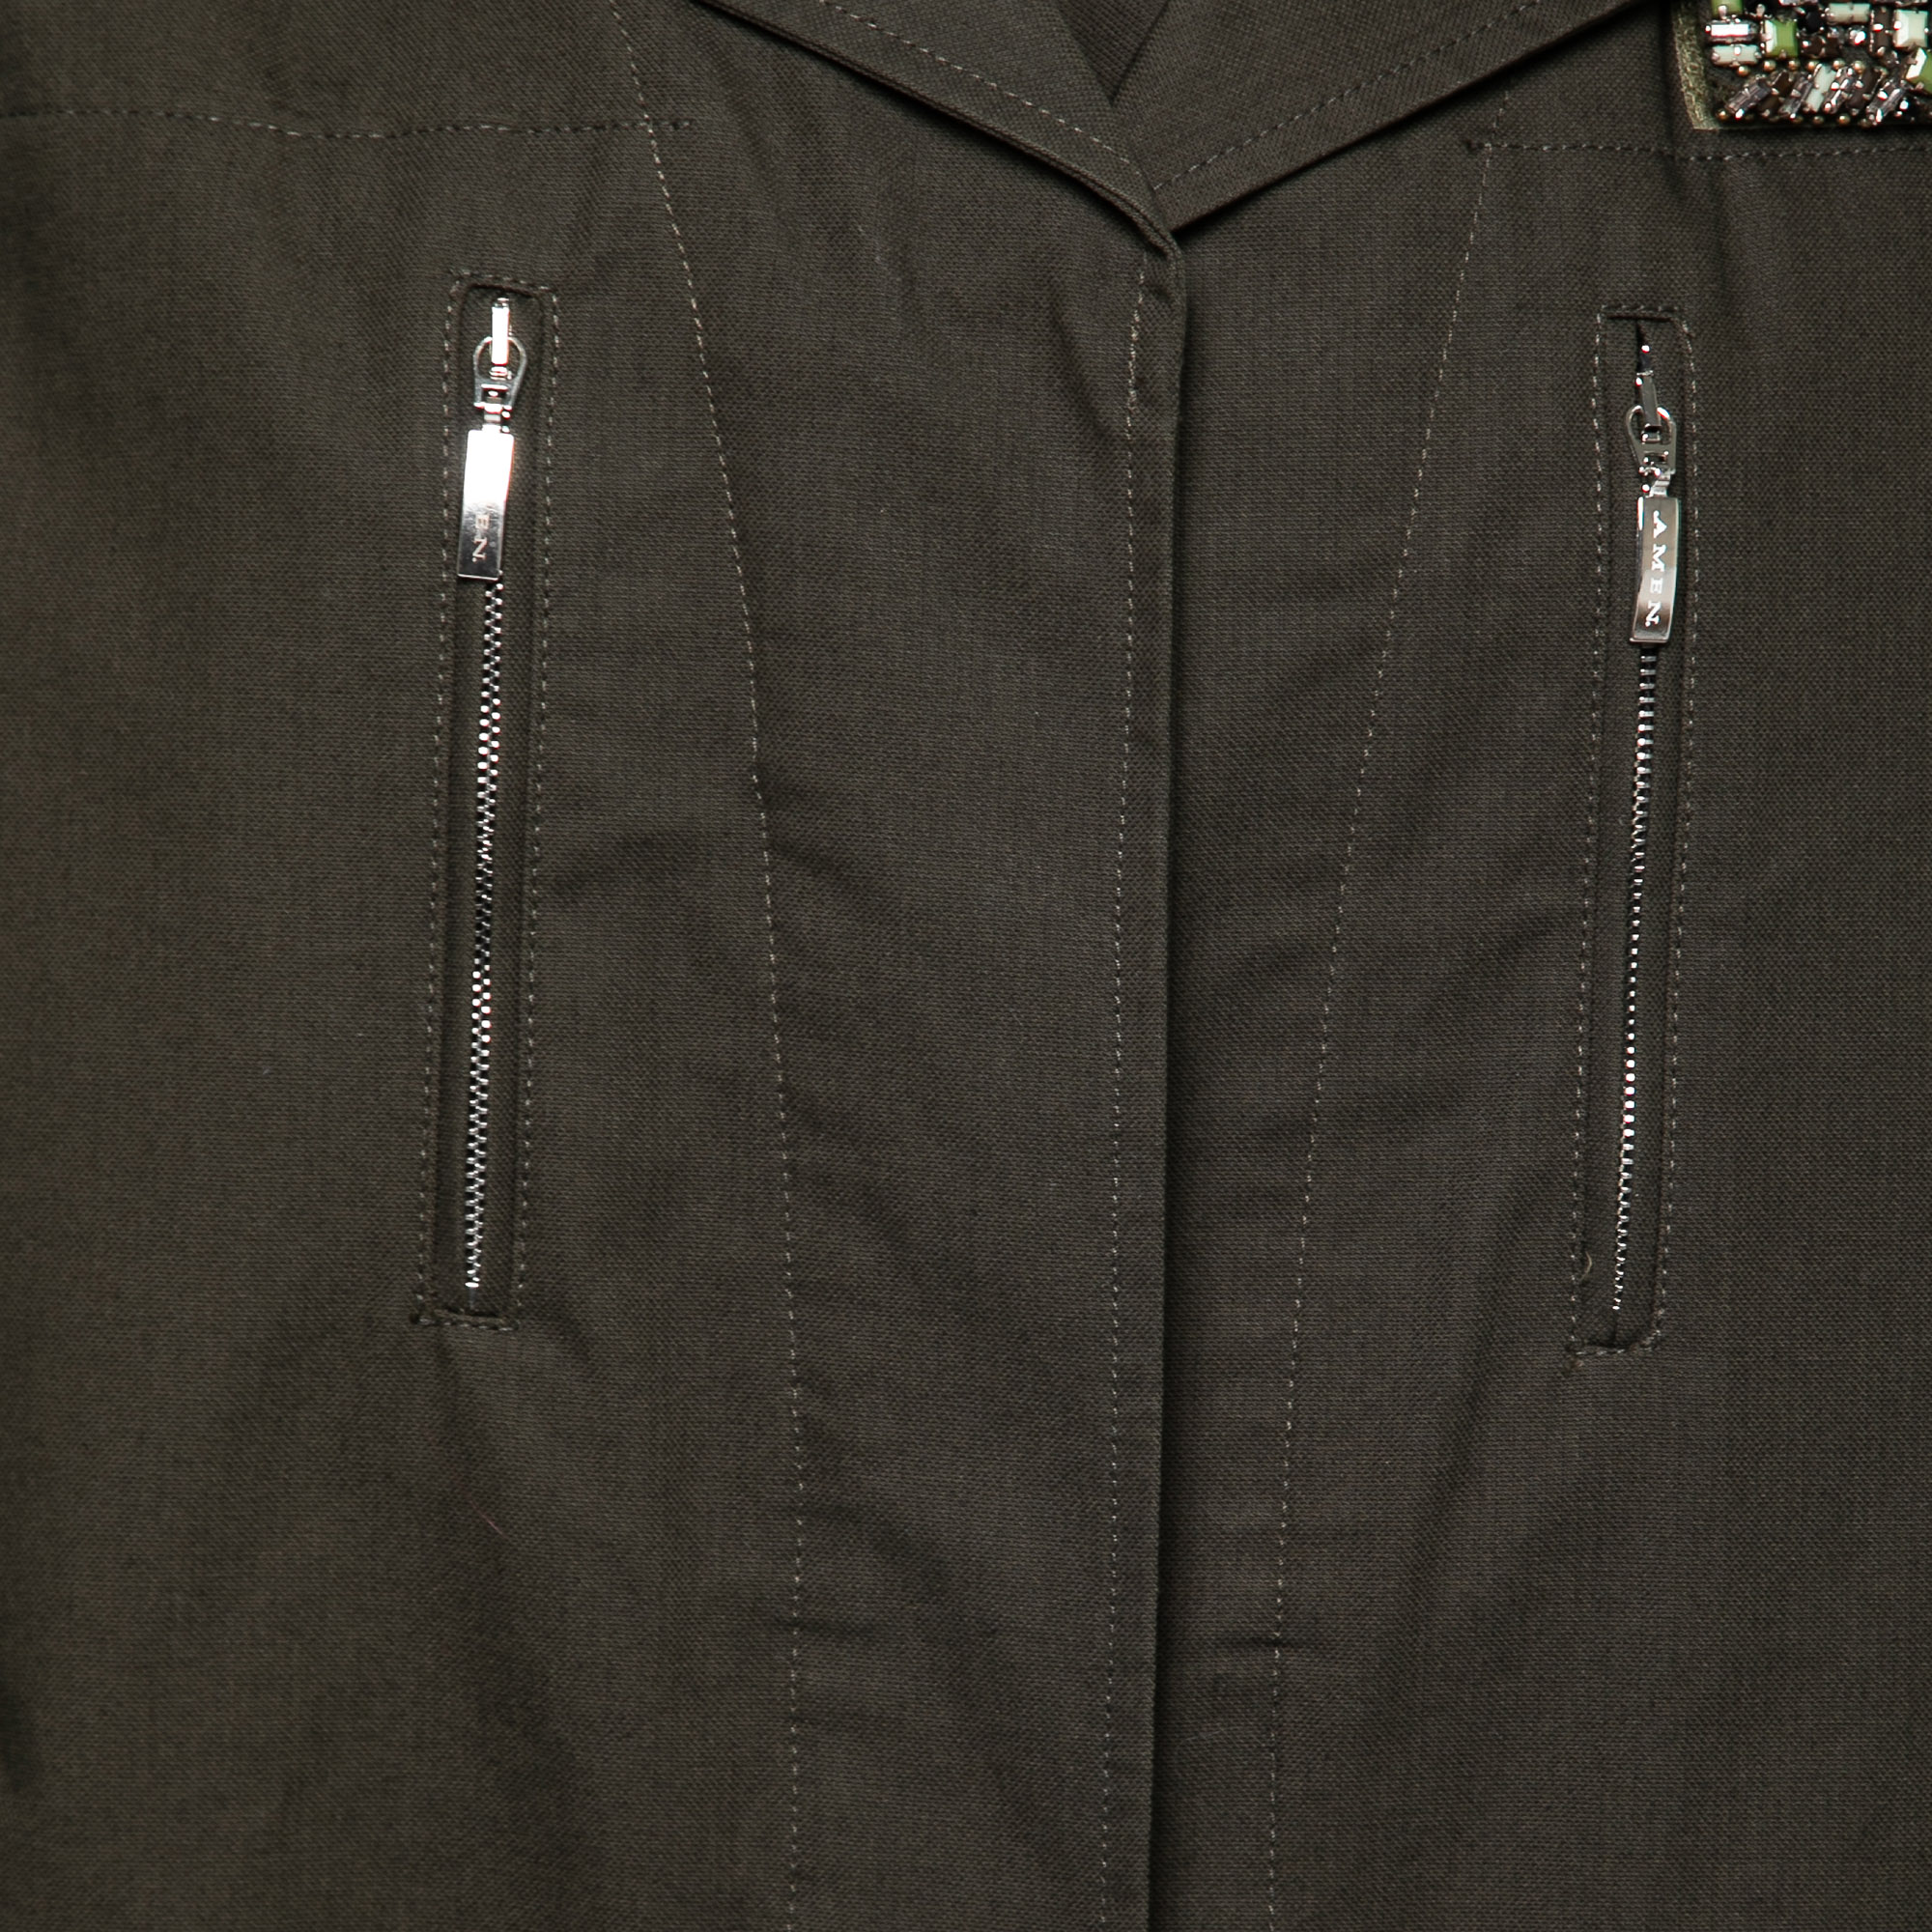 Amen Dark Green Cotton Crystal Embellished Epaulette Detail Military Jacket M